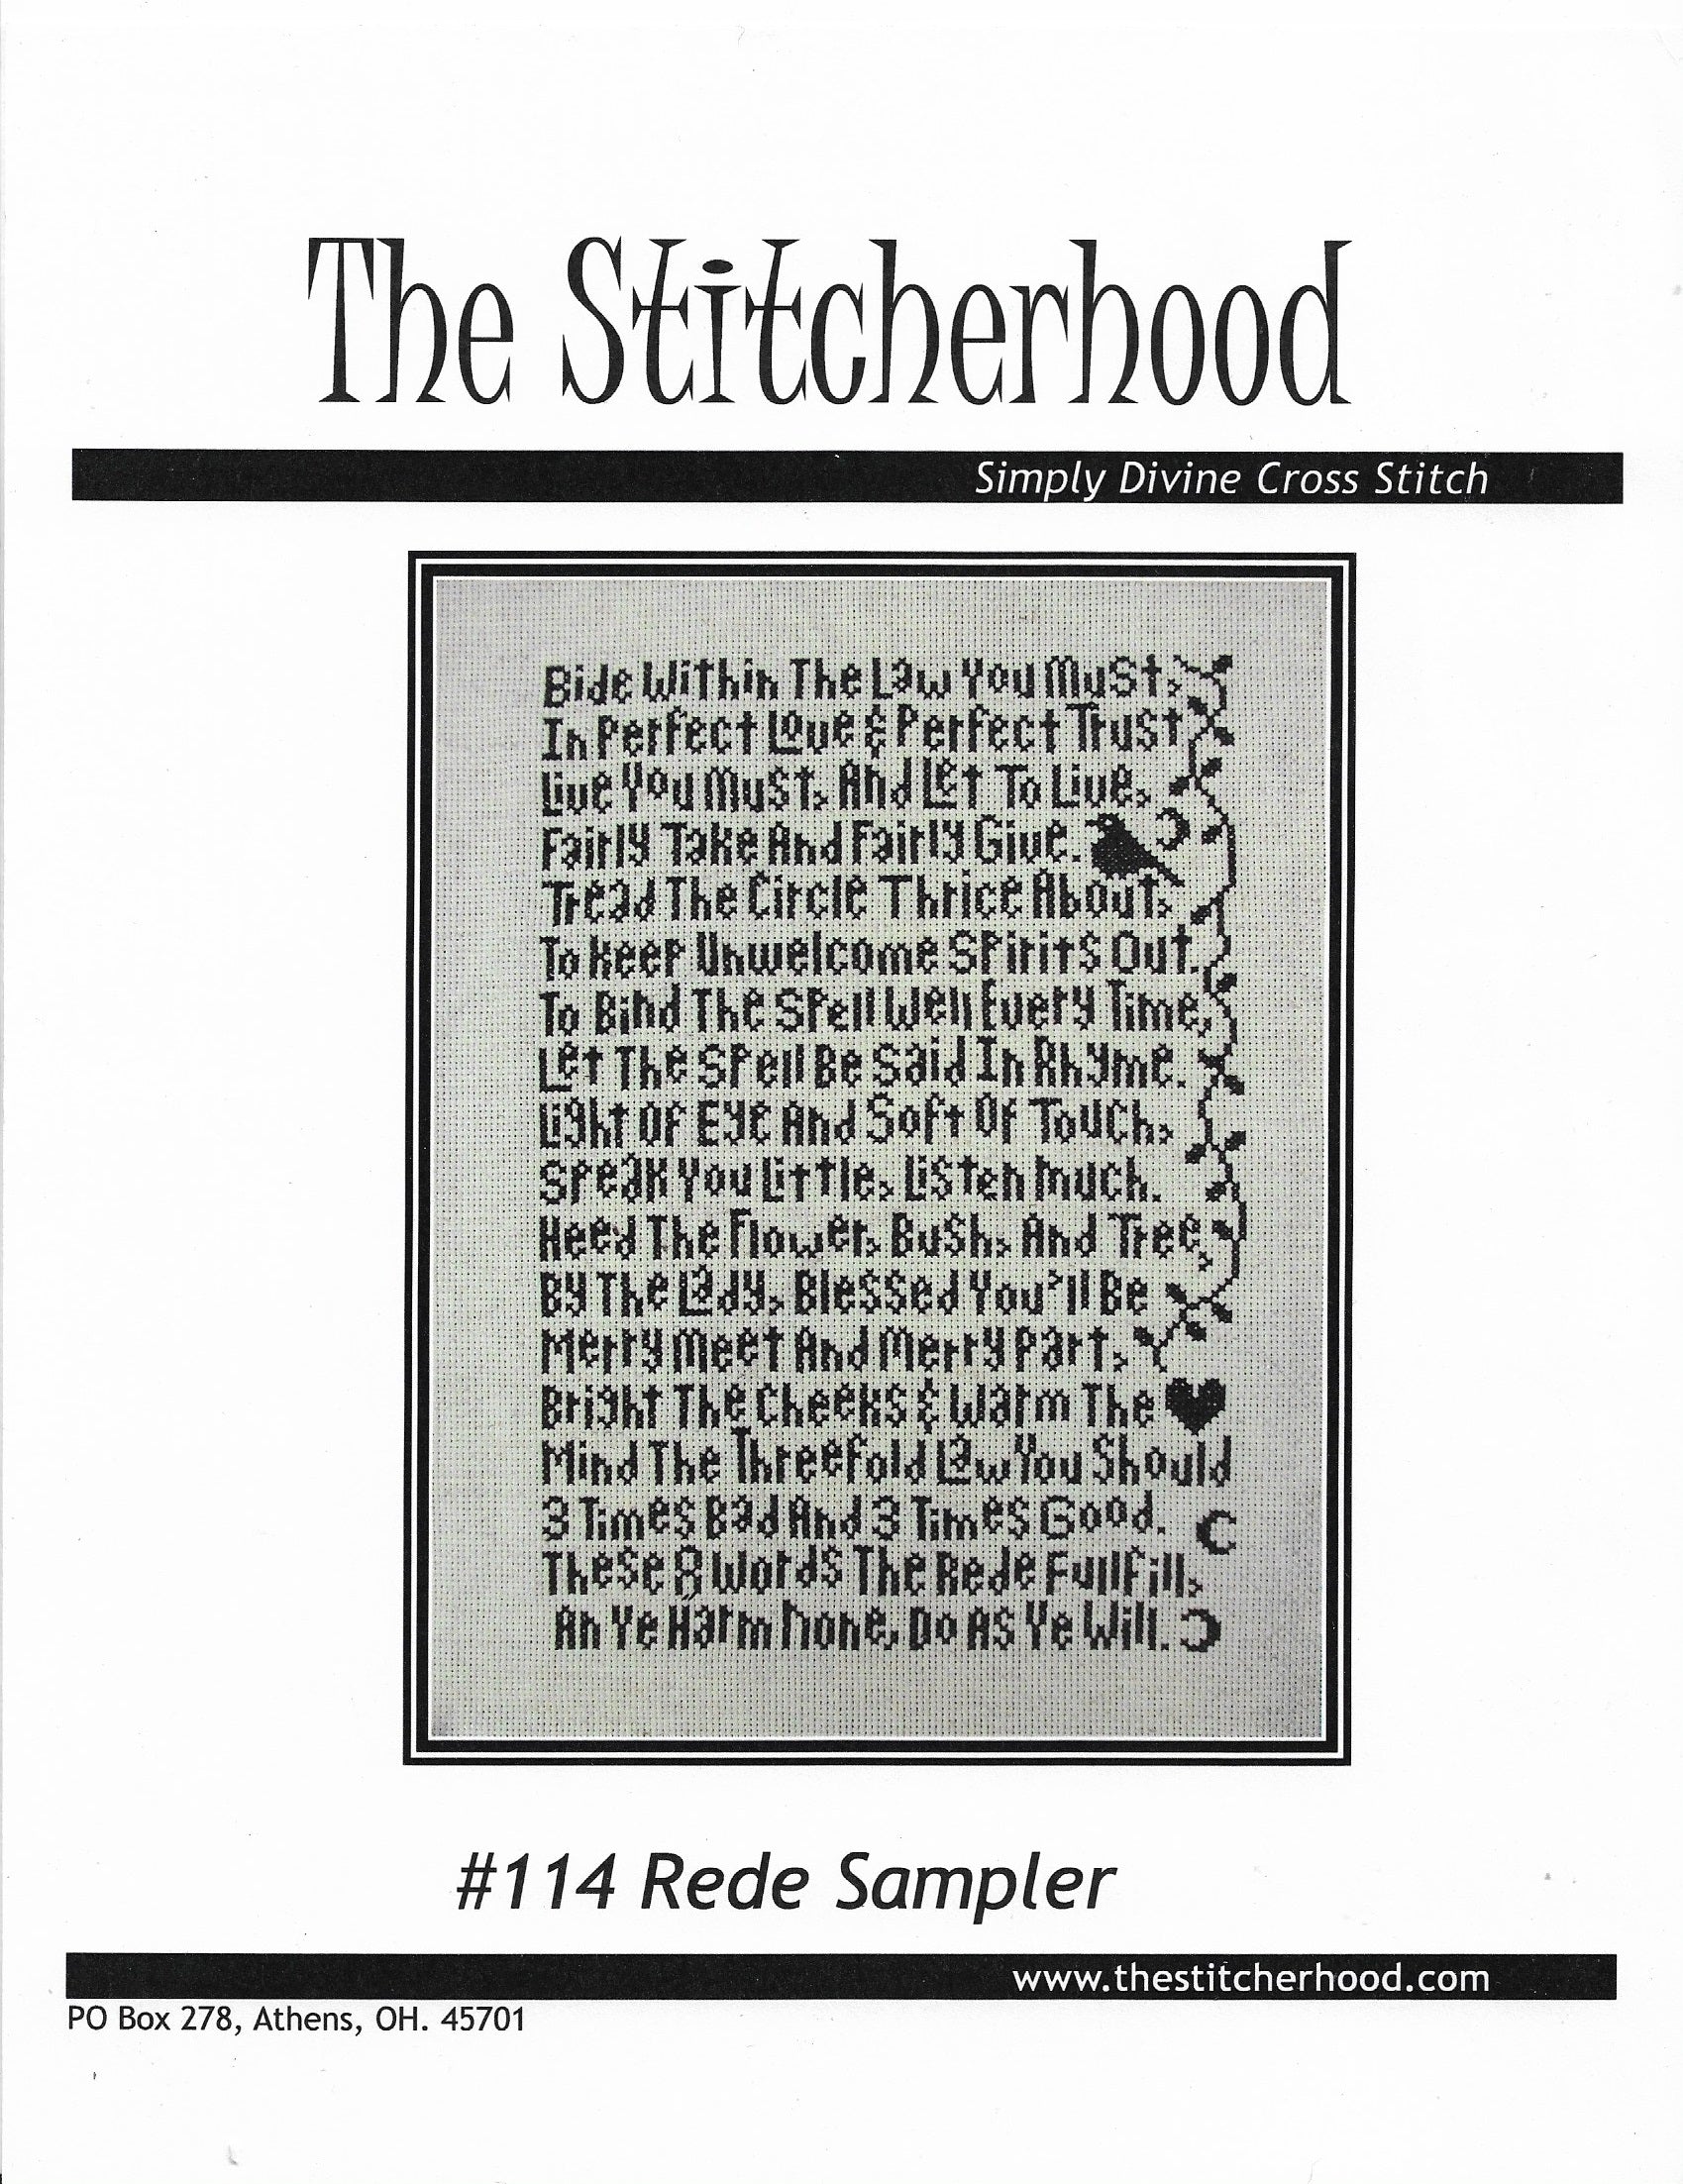 The Stitcherhood Wiccan Reed Sampler cross stitch pattern